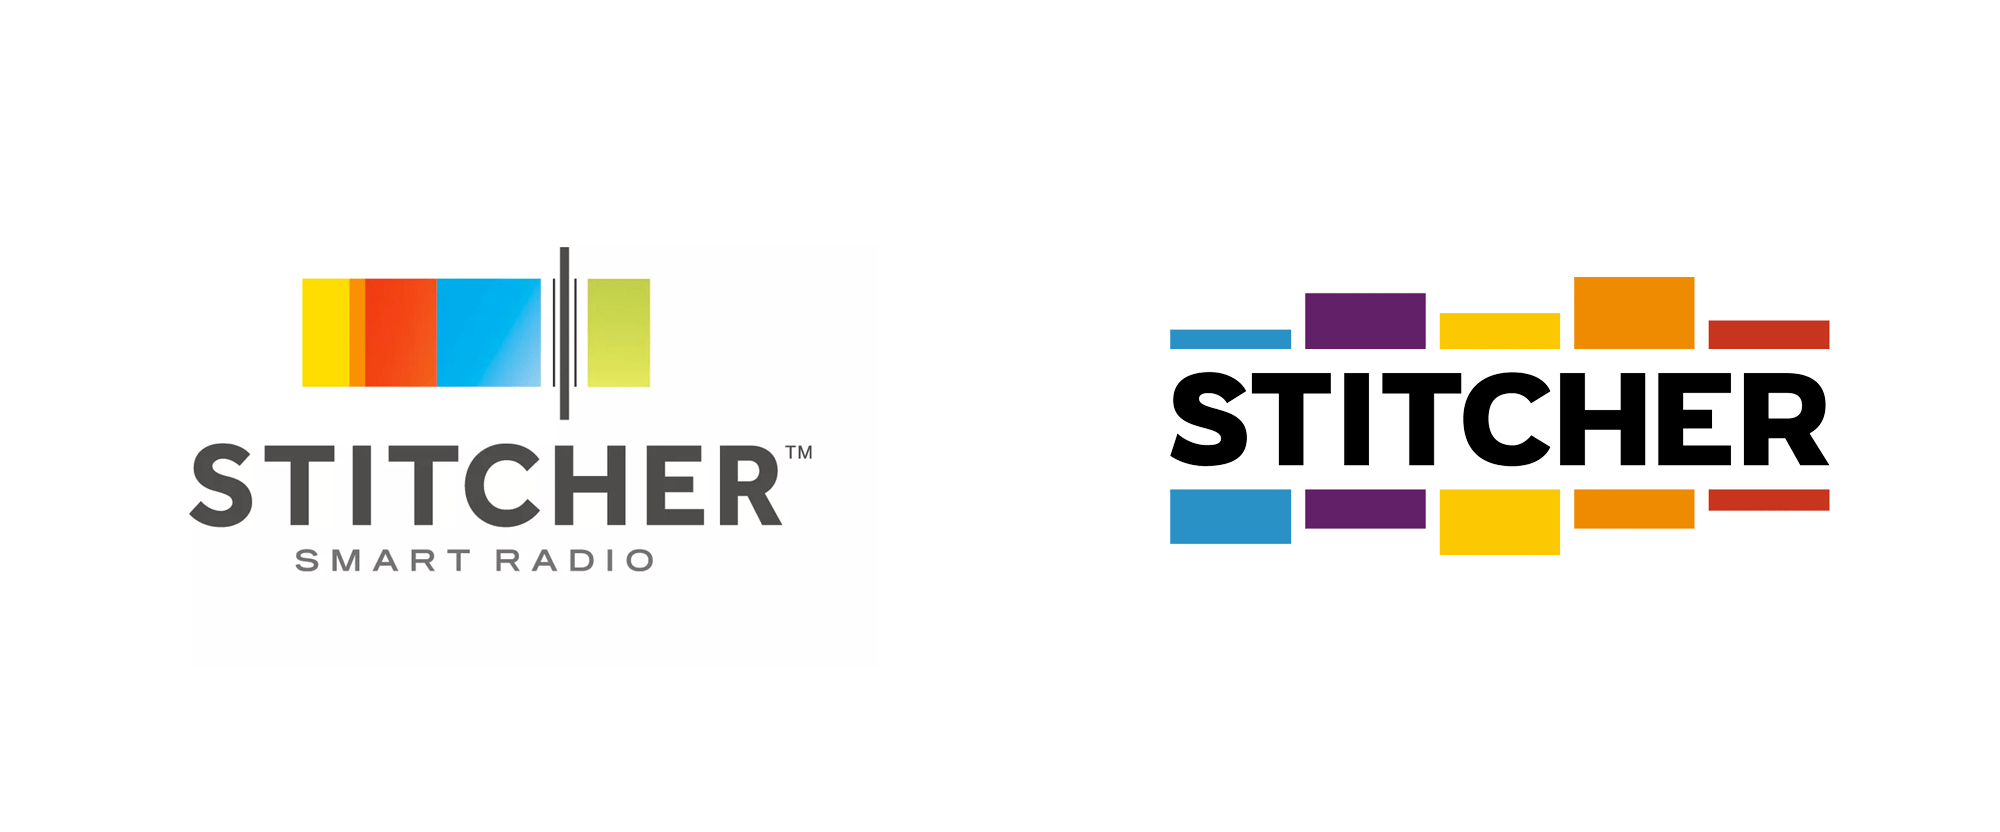 Stitcher Logo - Brand New: New Logo for Stitcher